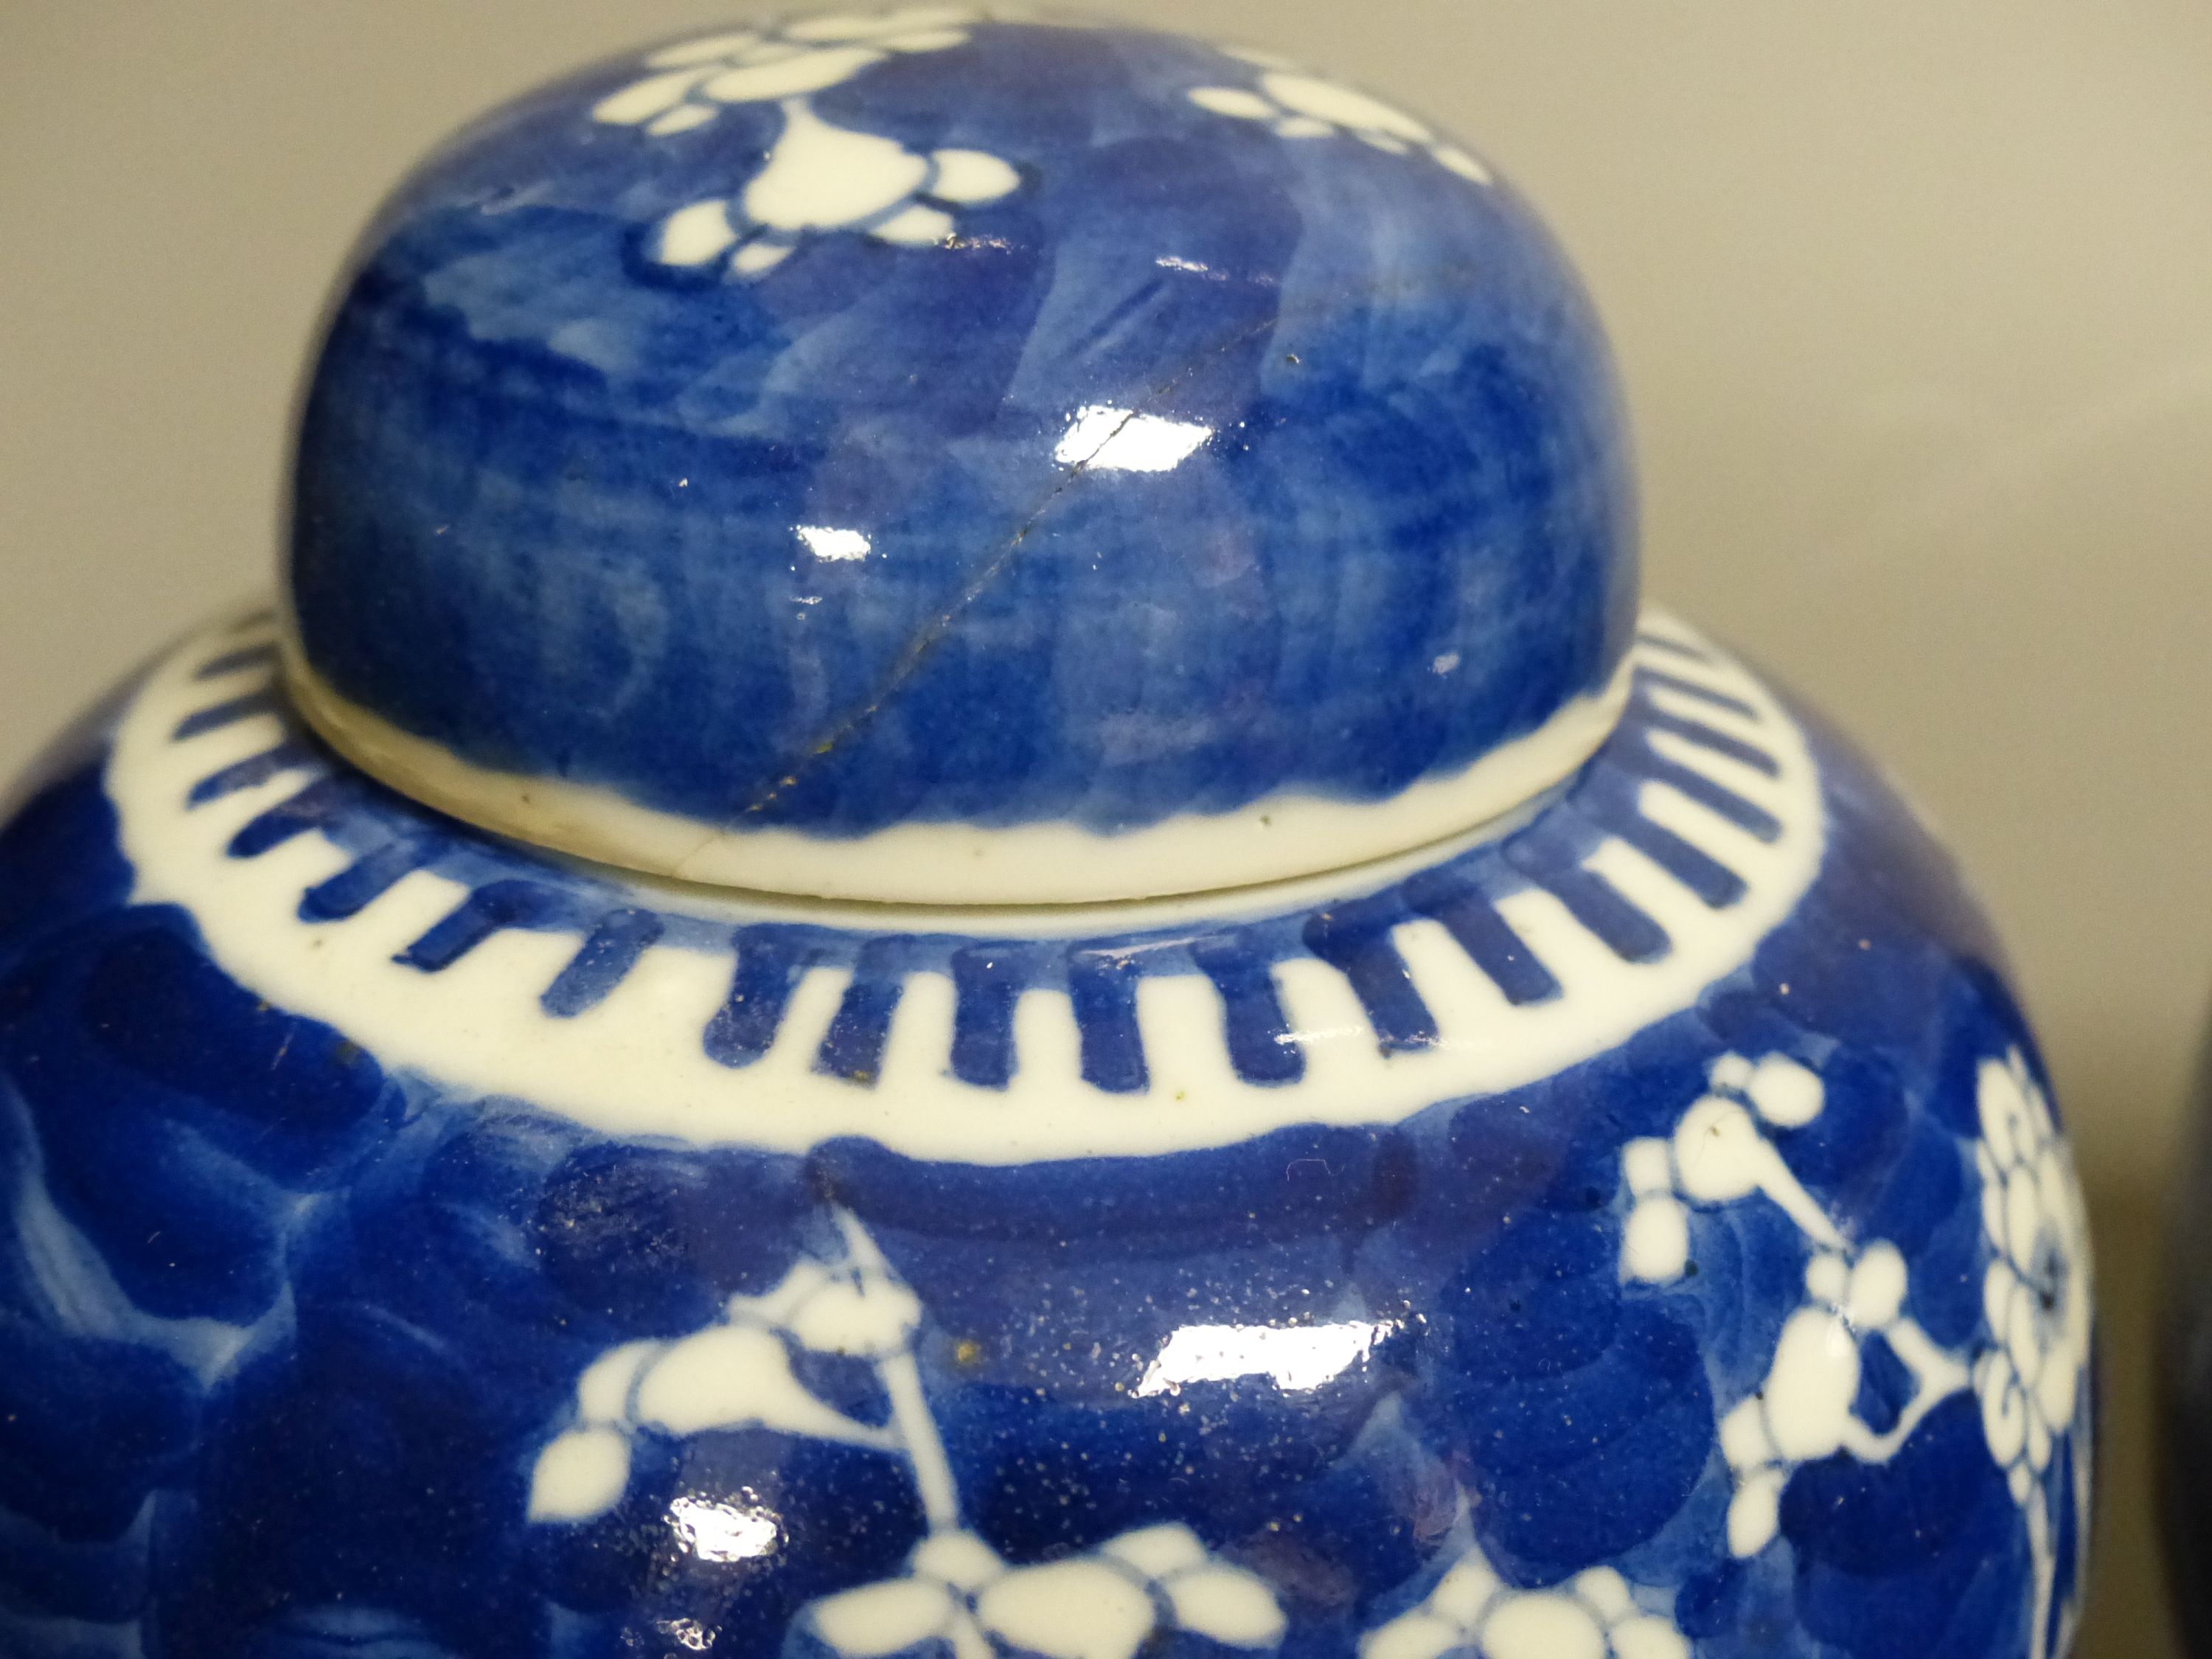 Three Chinese blue and white prunus jars, late 19th century/early 20th century